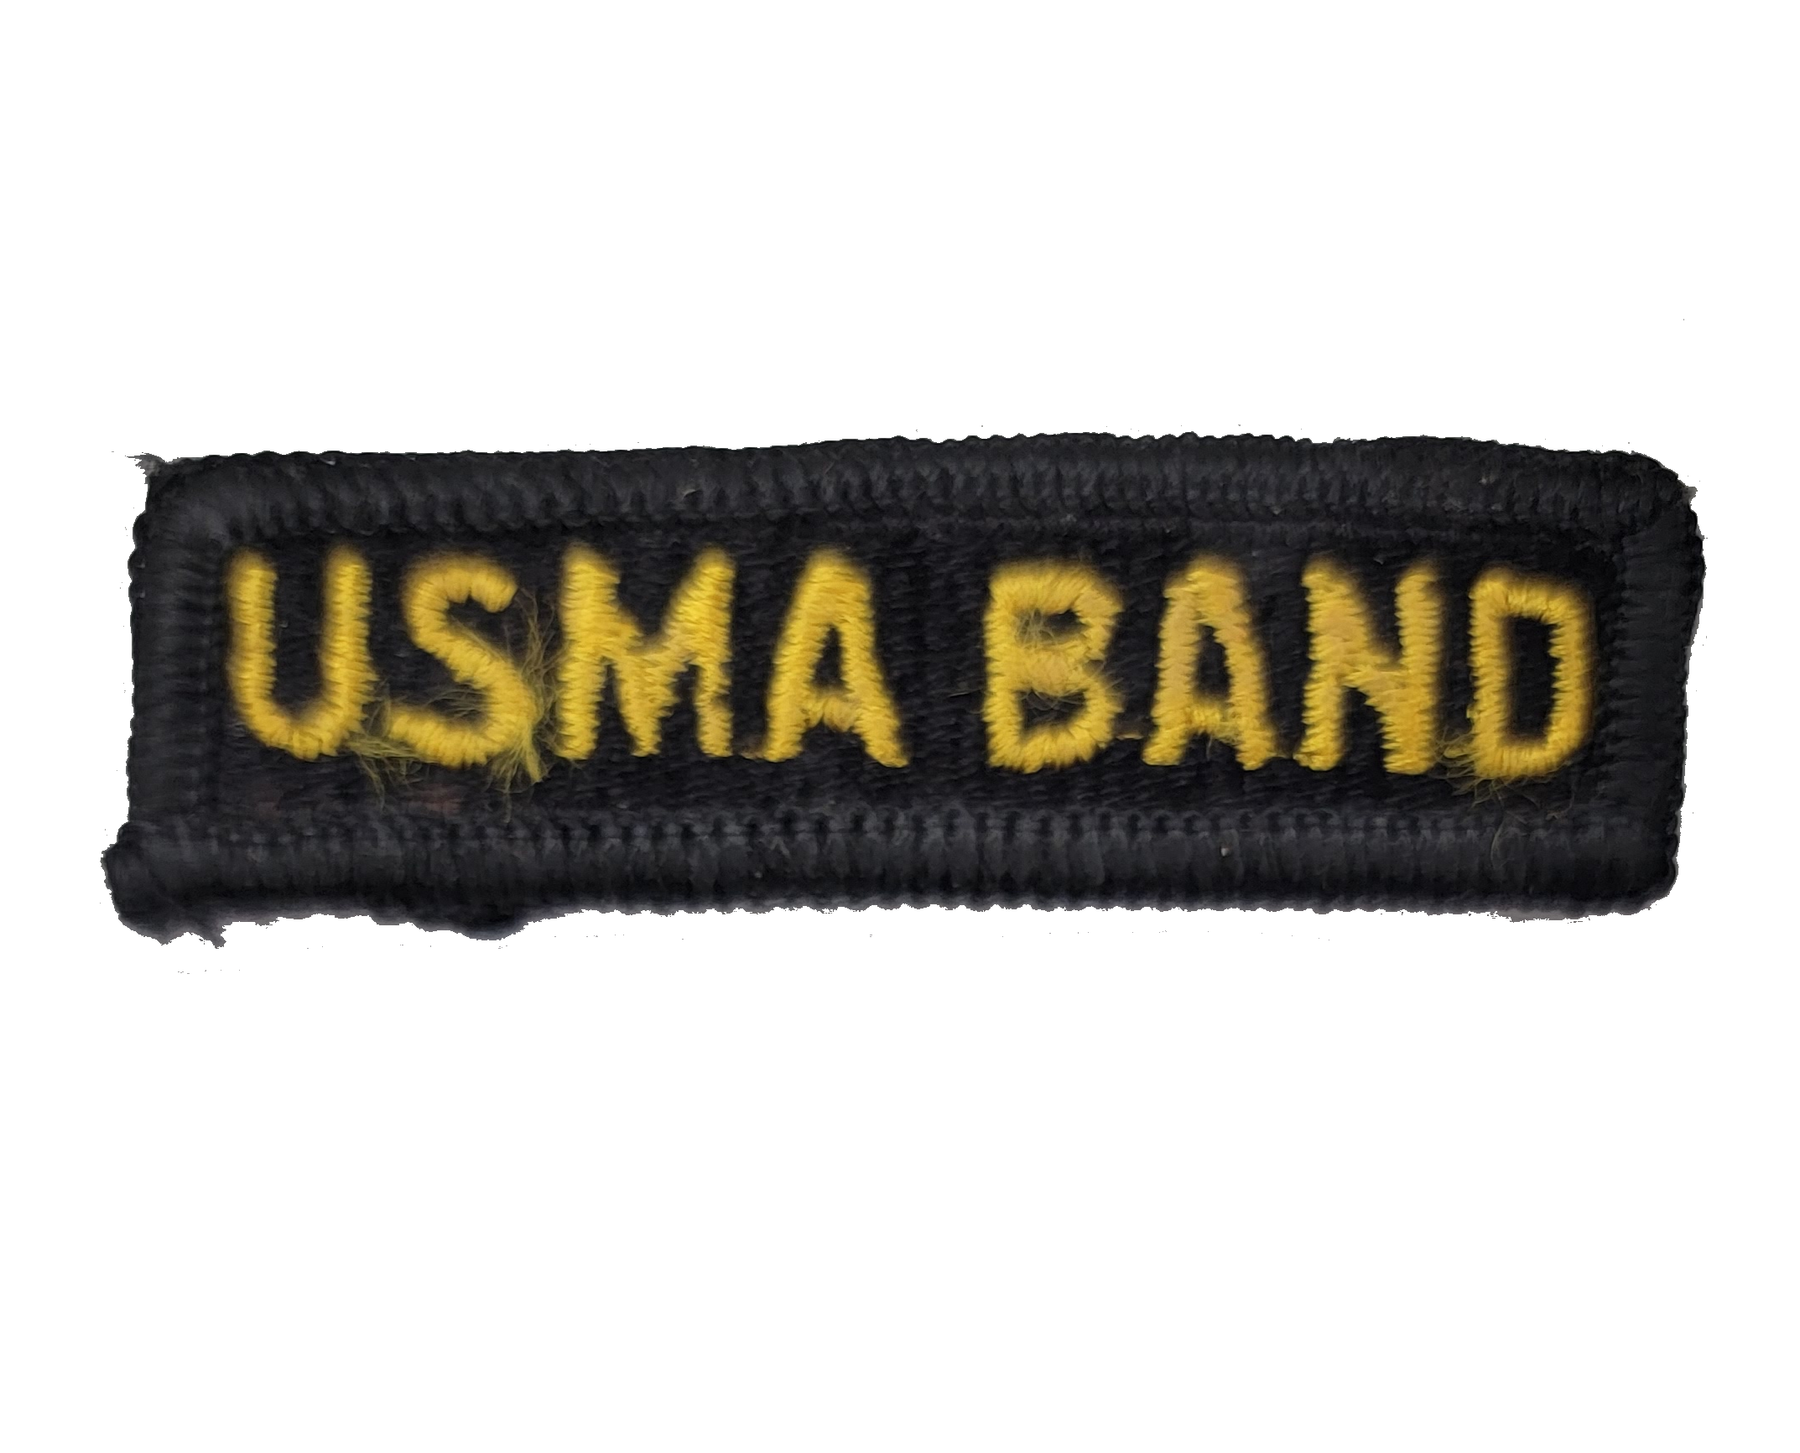 CLEARANCE - Vintage USMA Band Tab - Full Color Dress Military Surplus